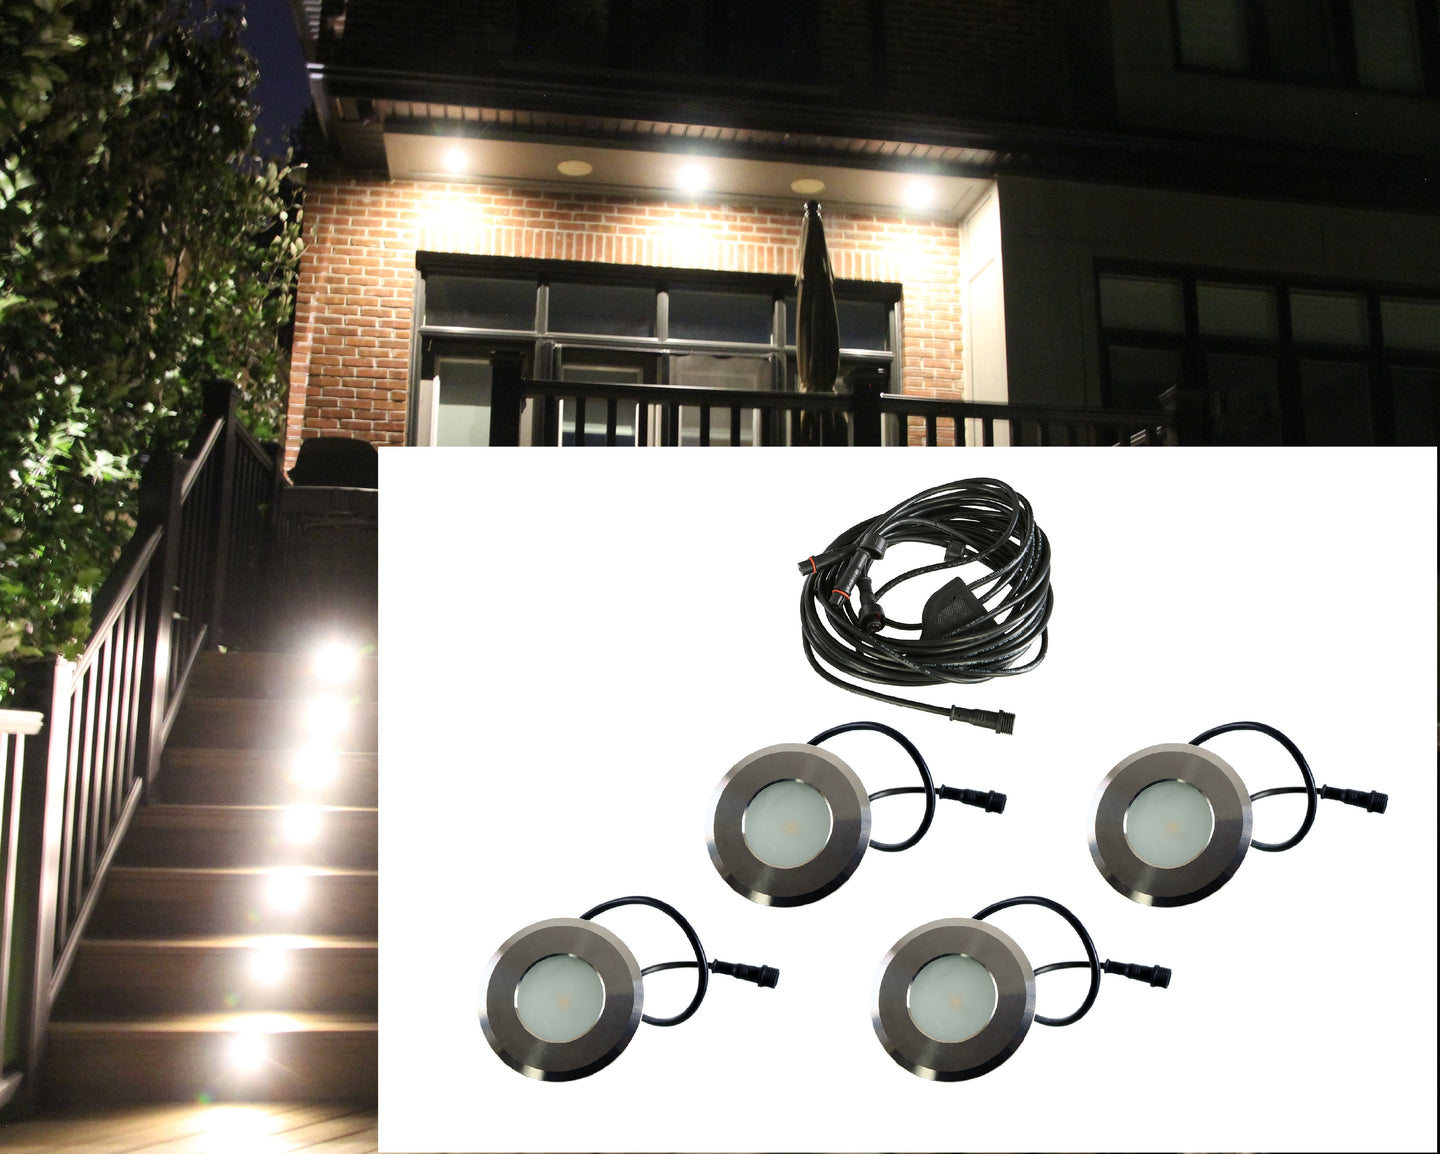 Inground LED Outdoor Recessed Lights KIT -  4 Recessed Lights 1 Watt with Wire Splitter #EZIL9KIT-BRUSHED NICKEL